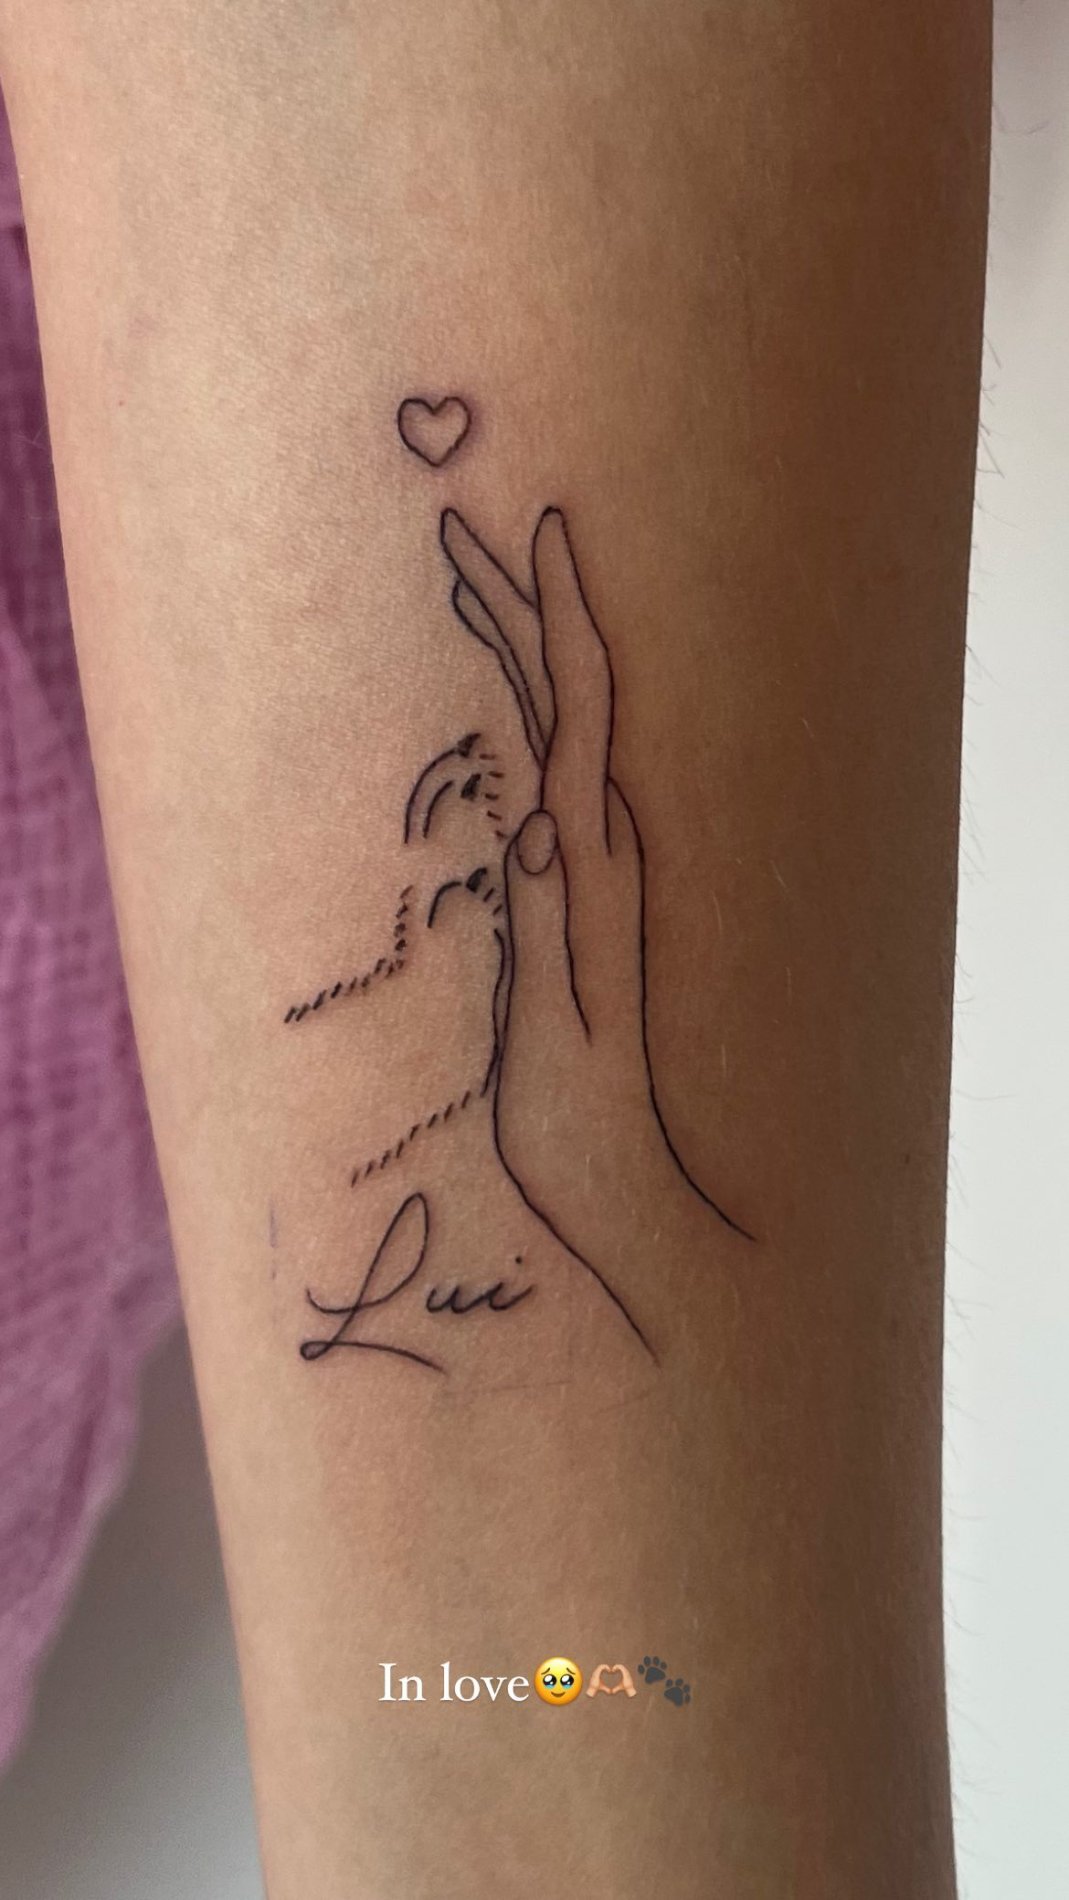 Anja ima novo tetovažo. Vir: Instagram